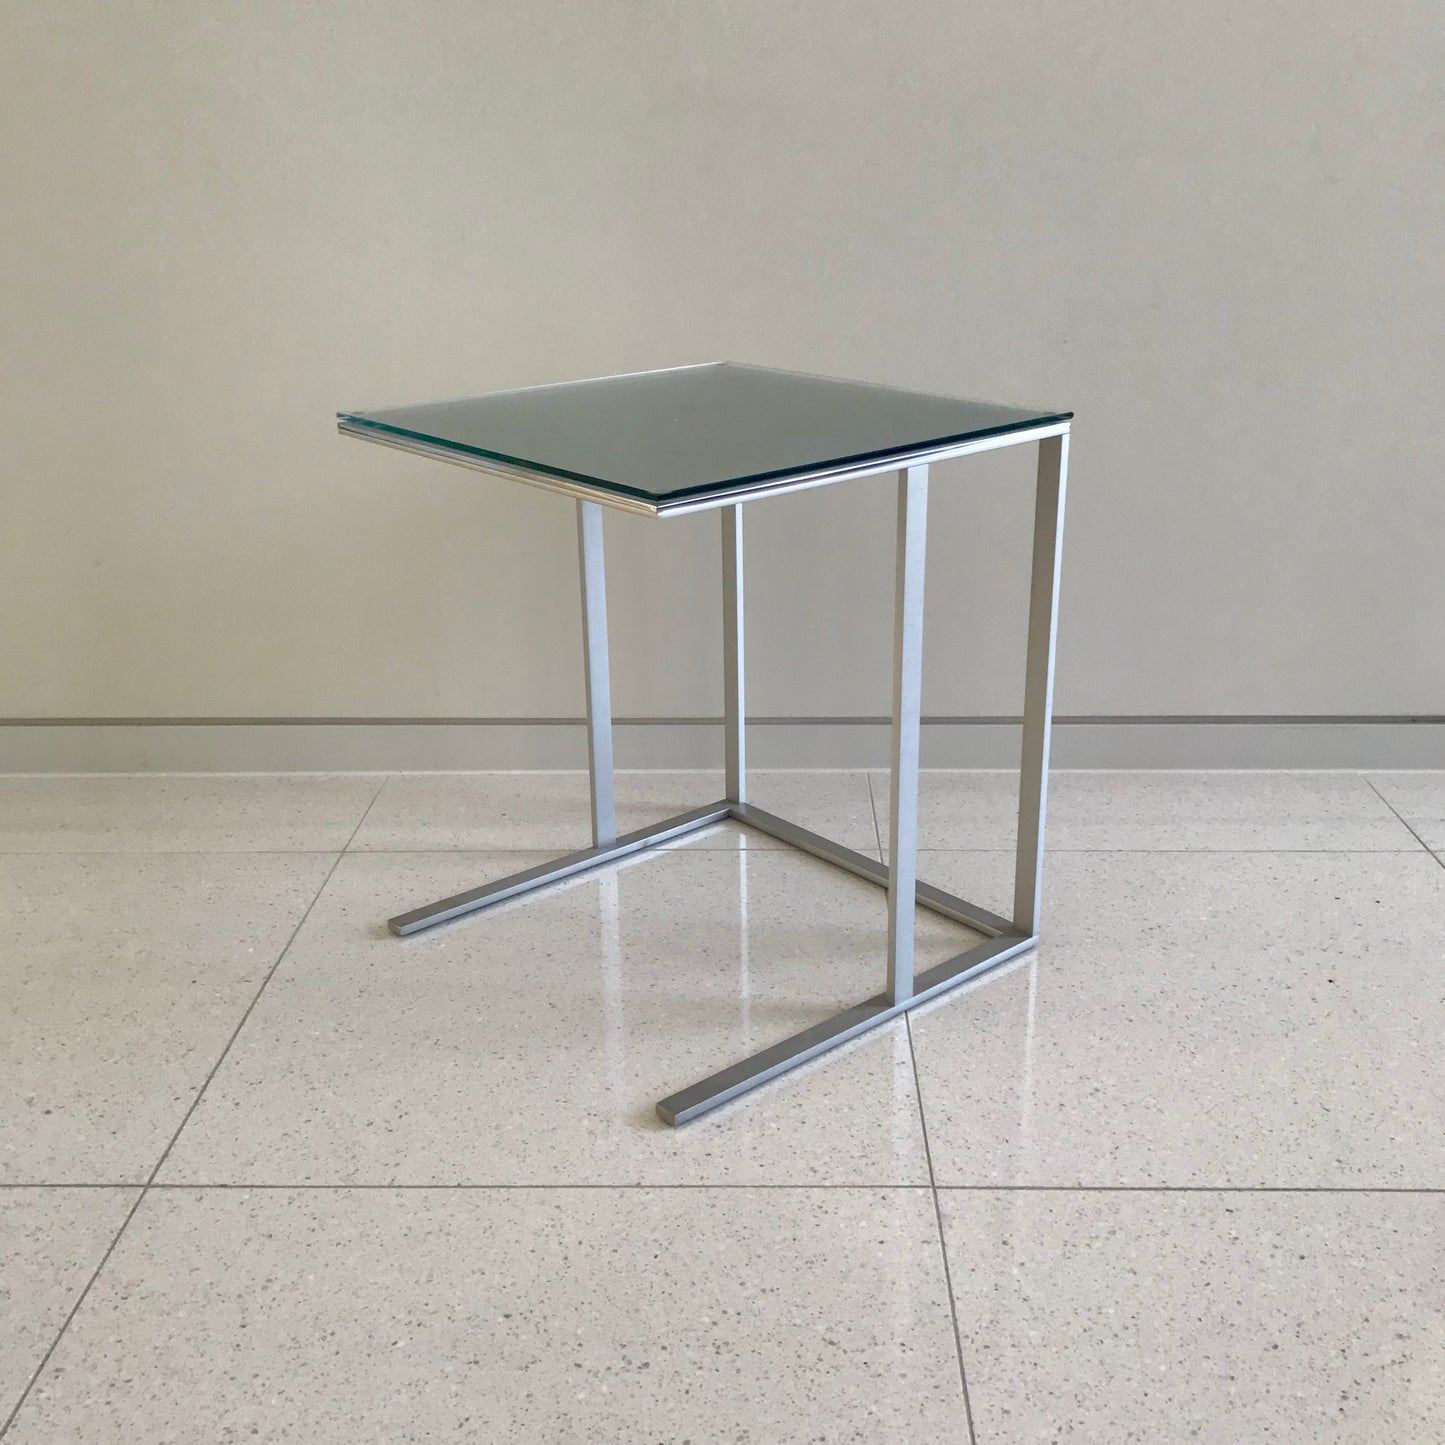 Elios / Simplice Side Table by Antonio Citterio for Maxalto (2 available)